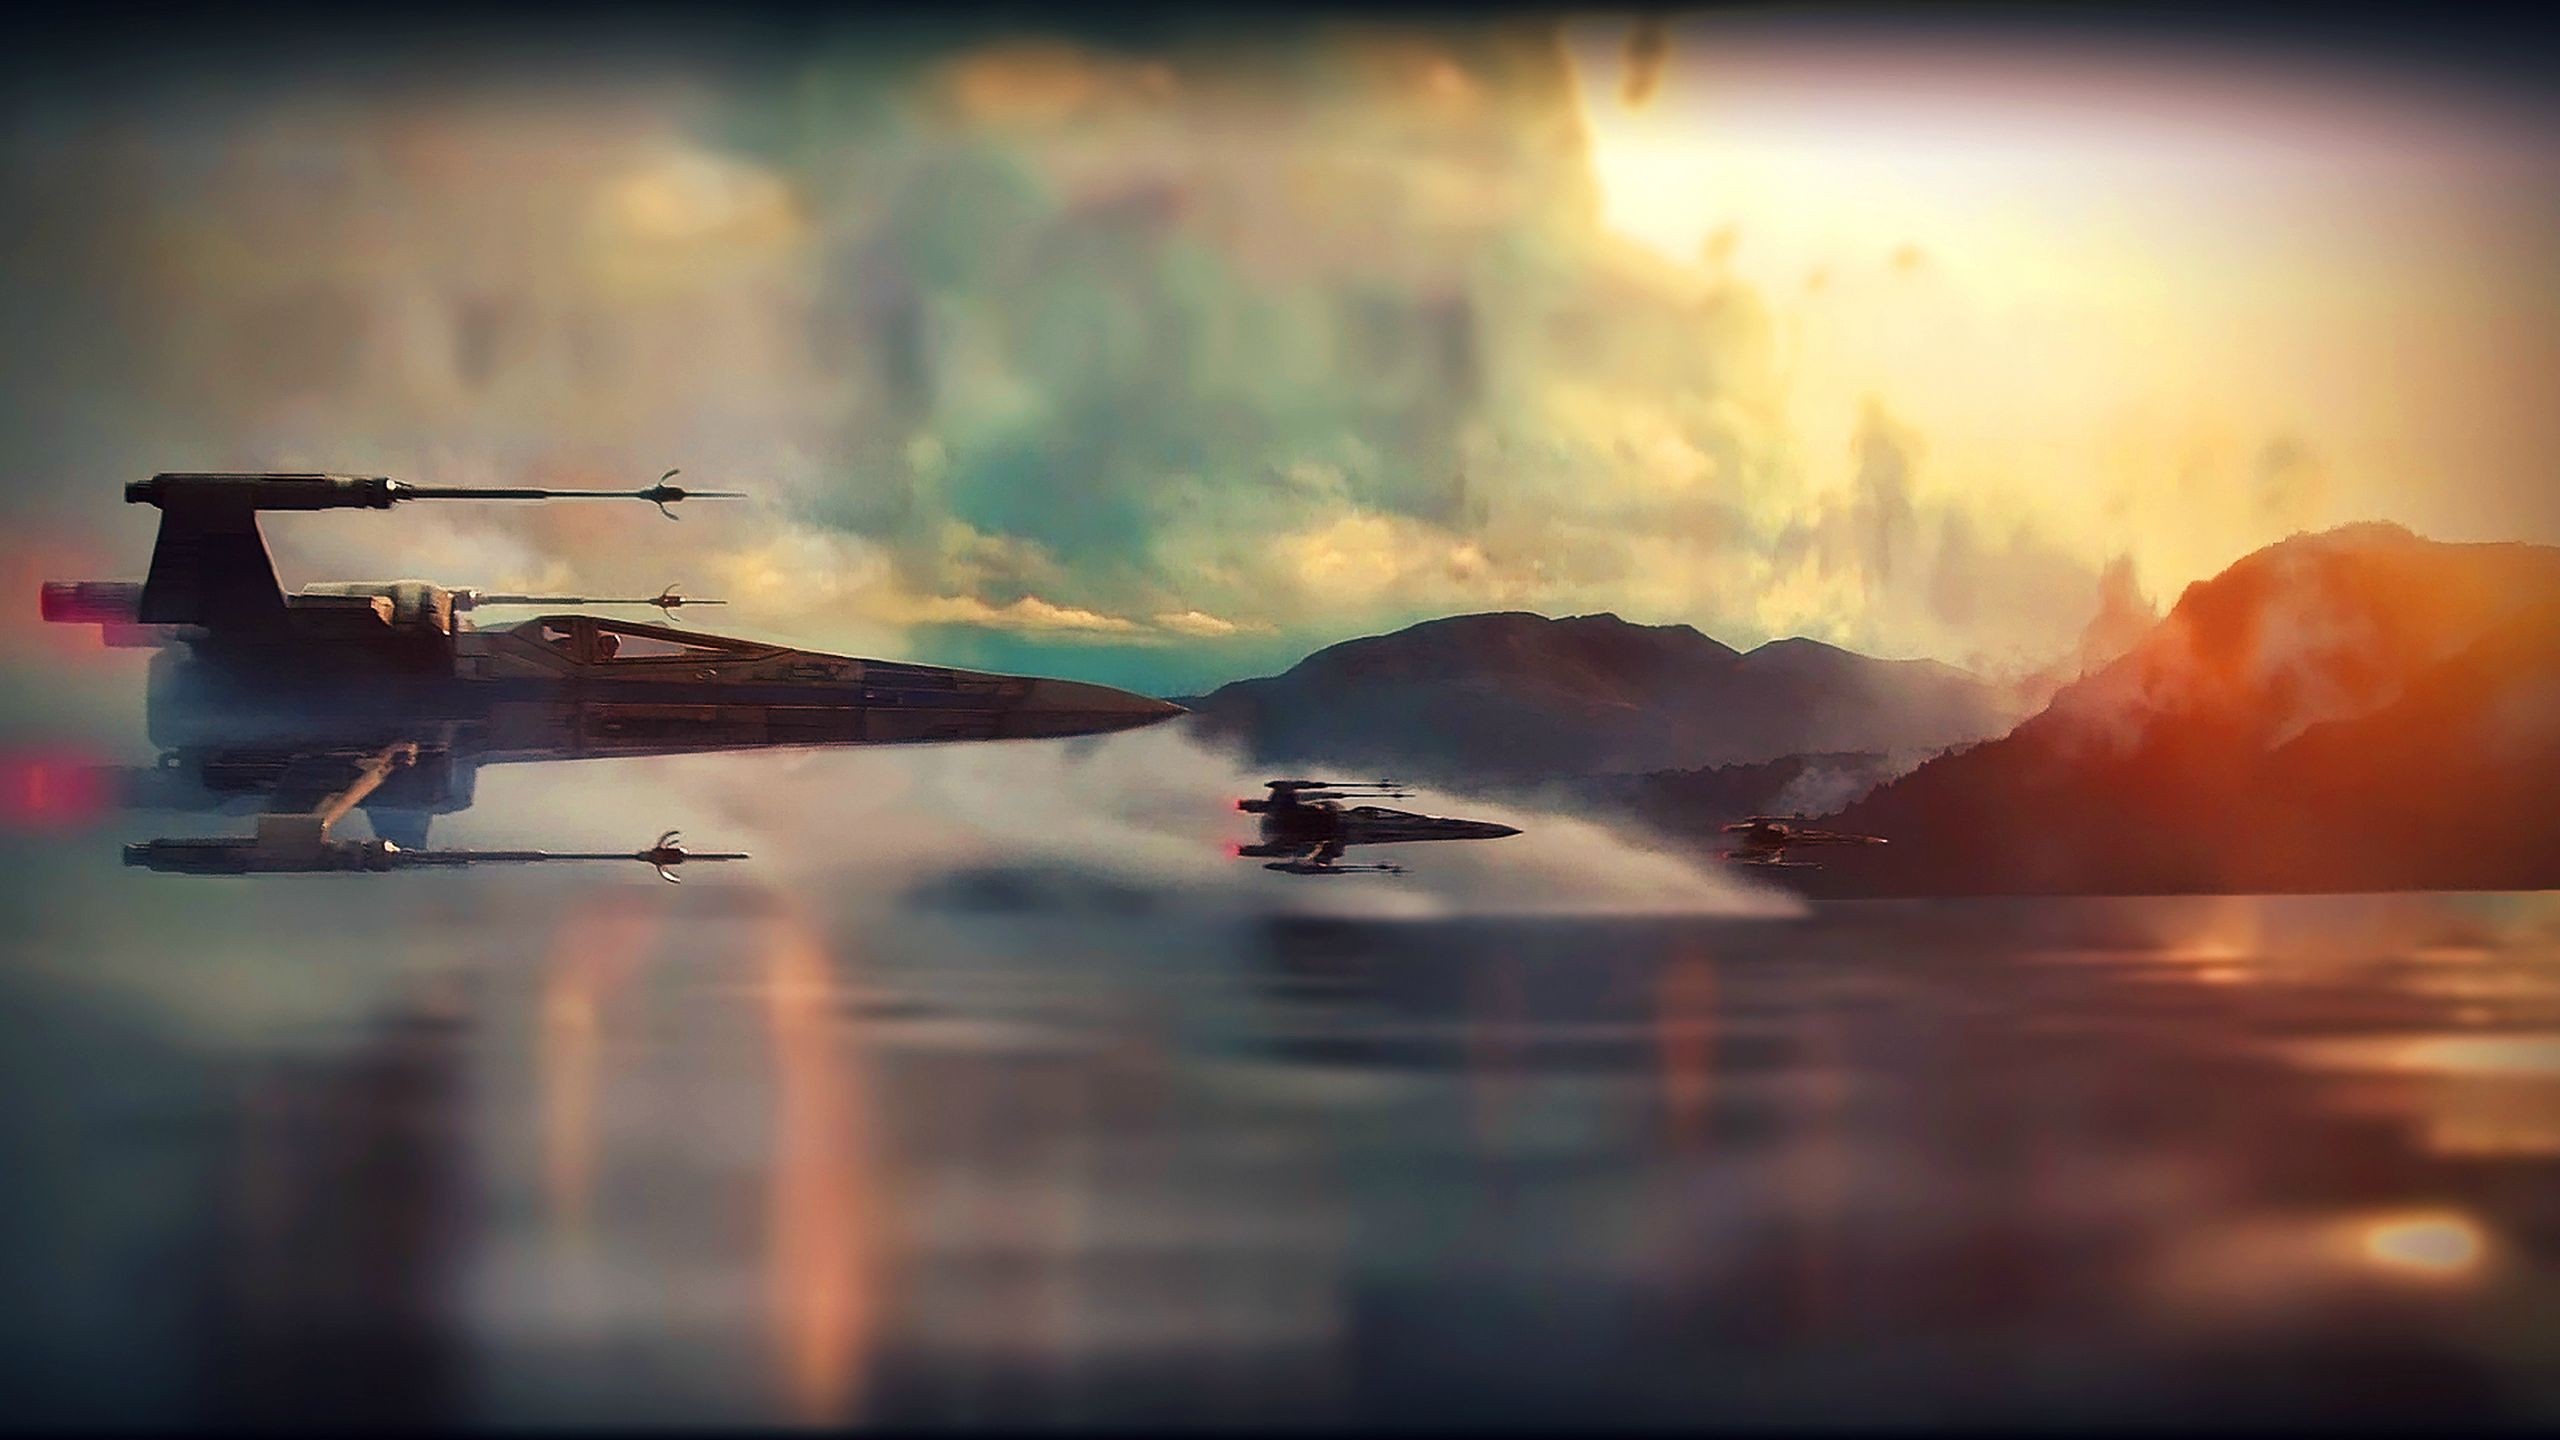 General 2560x1440 Star Wars Lake District X-wing Star Wars Ships digital art science fiction vehicle movies Star Wars: The Force Awakens